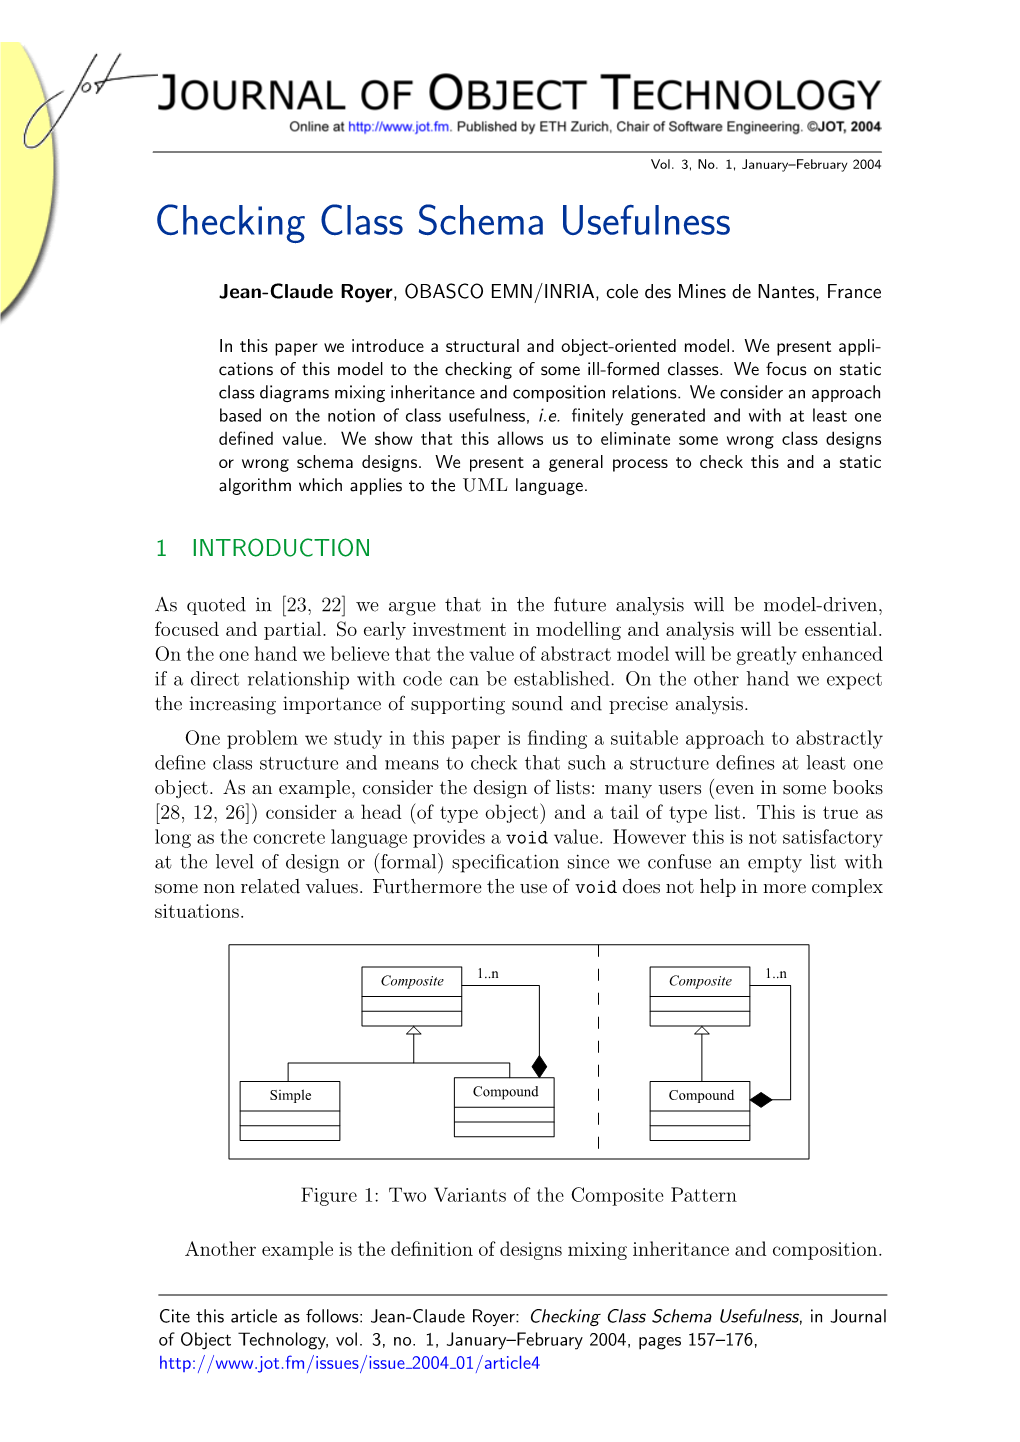 Checking Class Schema Usefulness